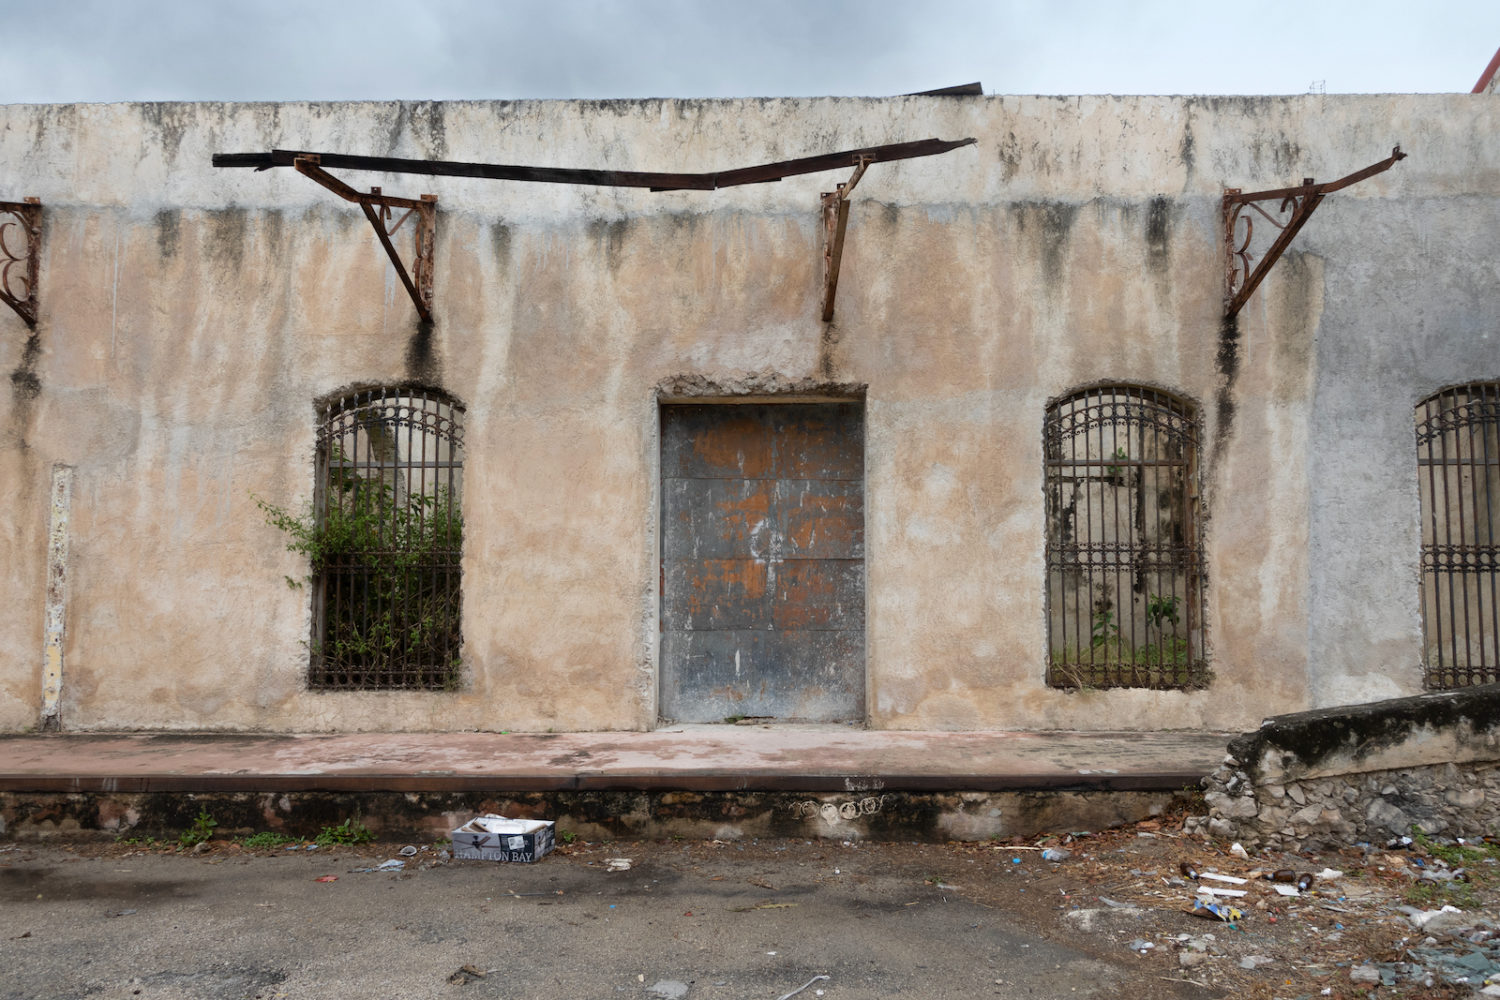 Abandoned building in Merida, Mexico